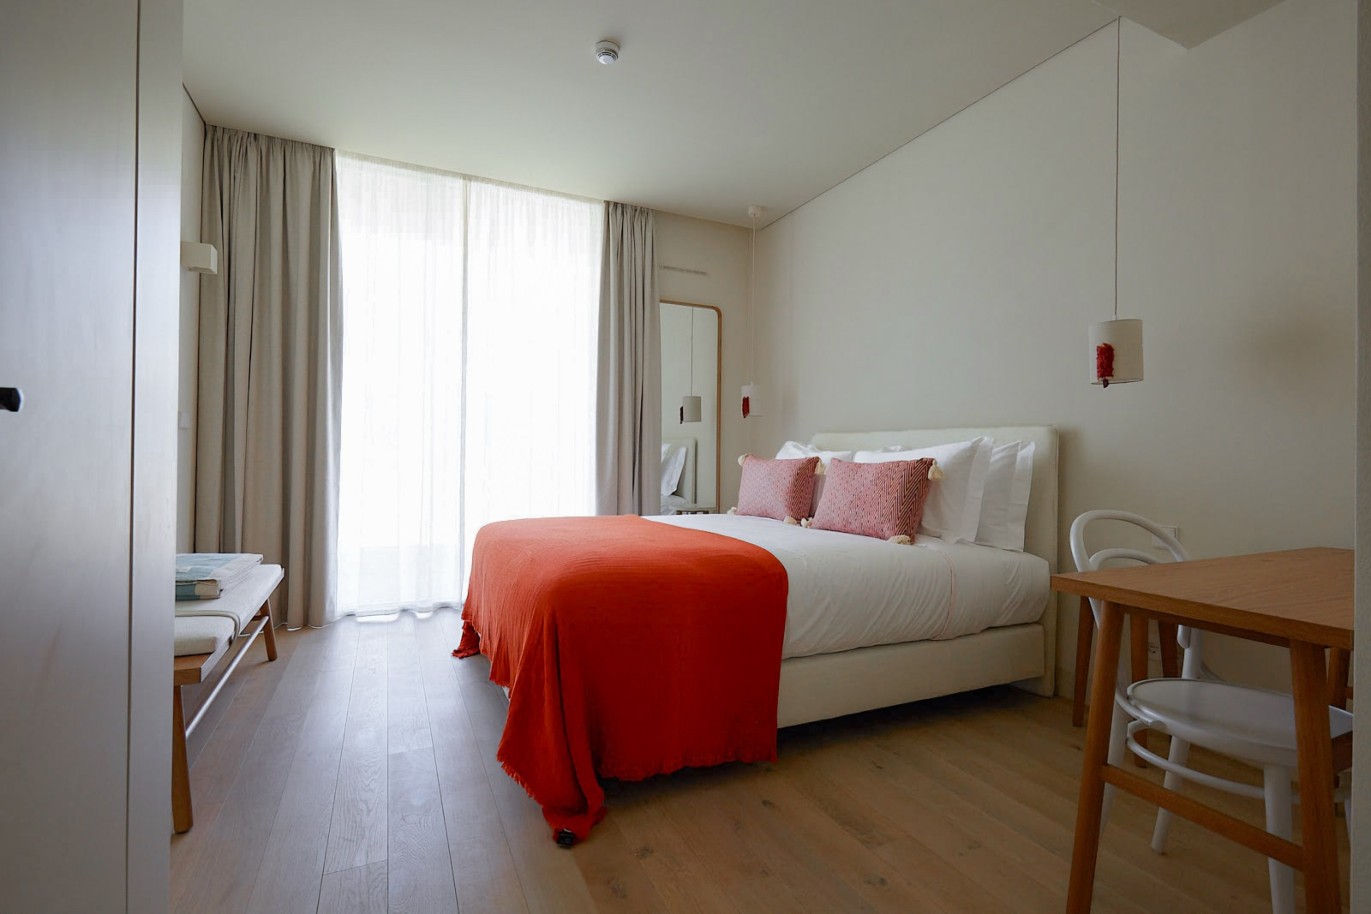 2 bedroom apartment in resort, for sale in Porches, Algarve_230672